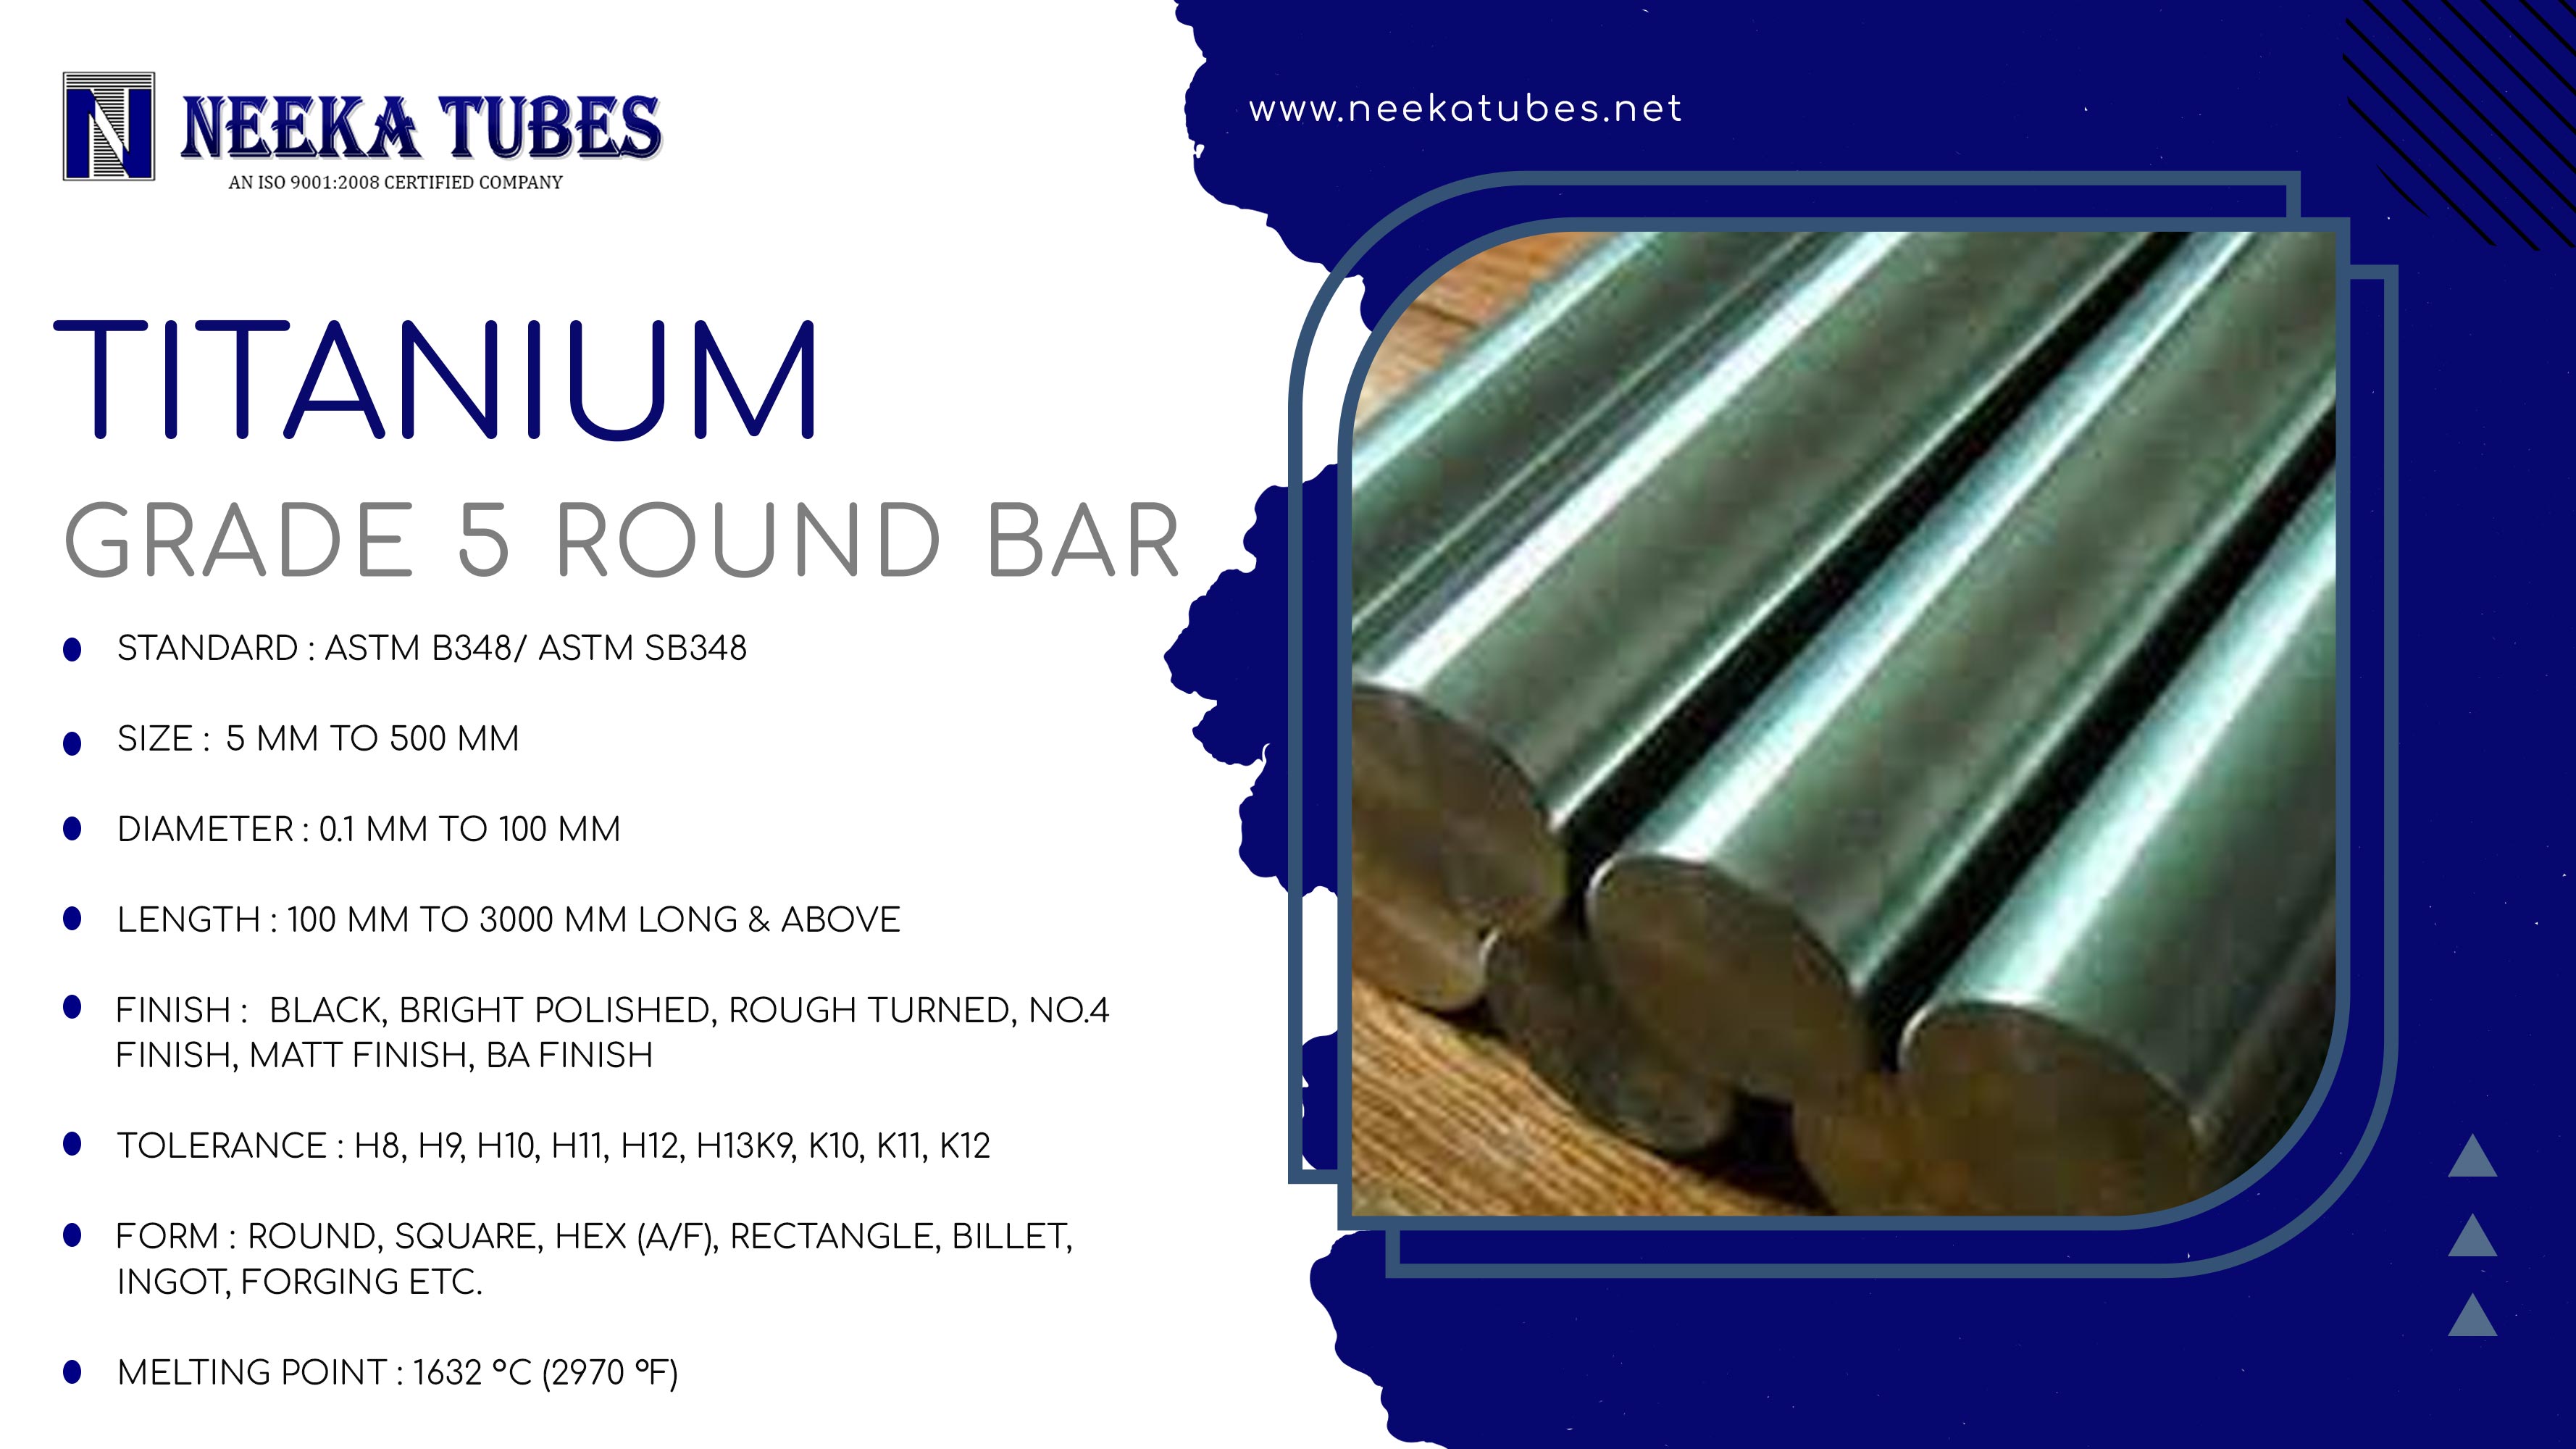 Tittanium grade 5 round bar specification